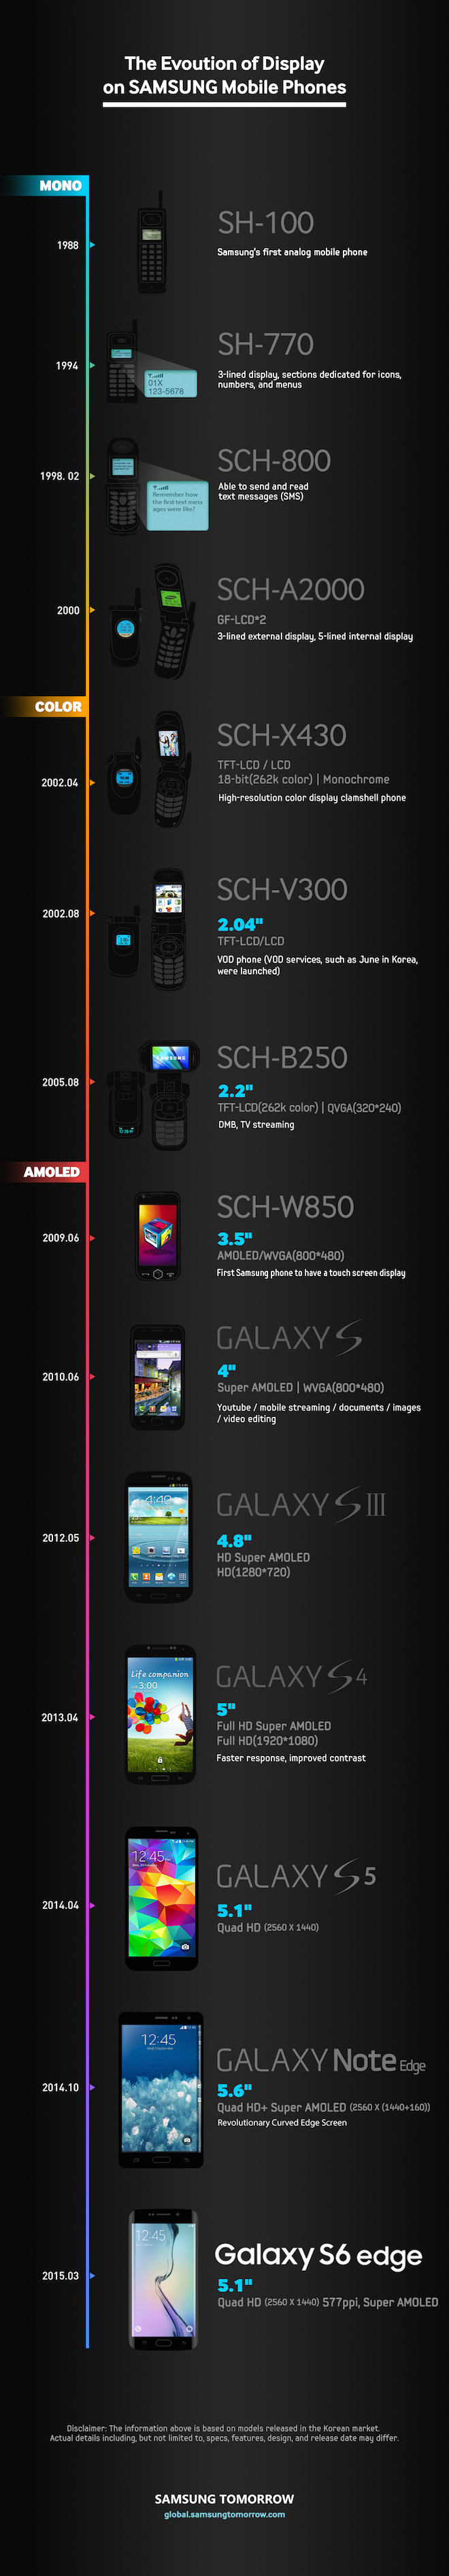 Samsung Display infographic